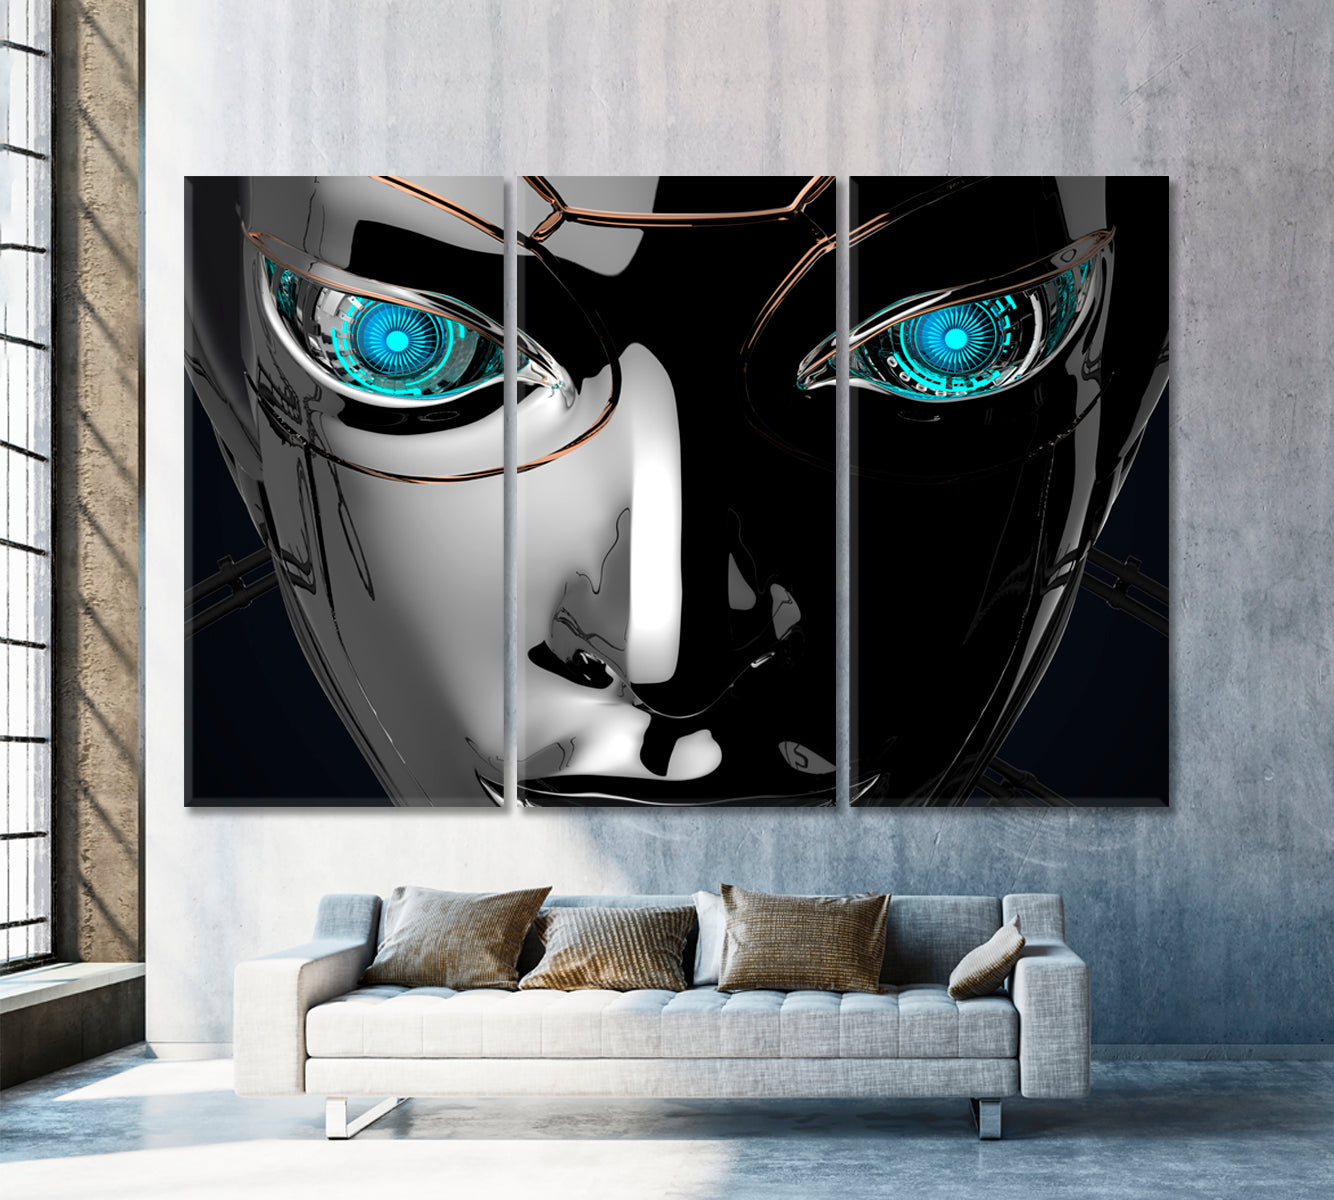 CYBER WORLD Female Bot Face Robot Futuristic Cyber Technology Poster Business Concept Wall Art Artesty 3 panels 36" x 24" 